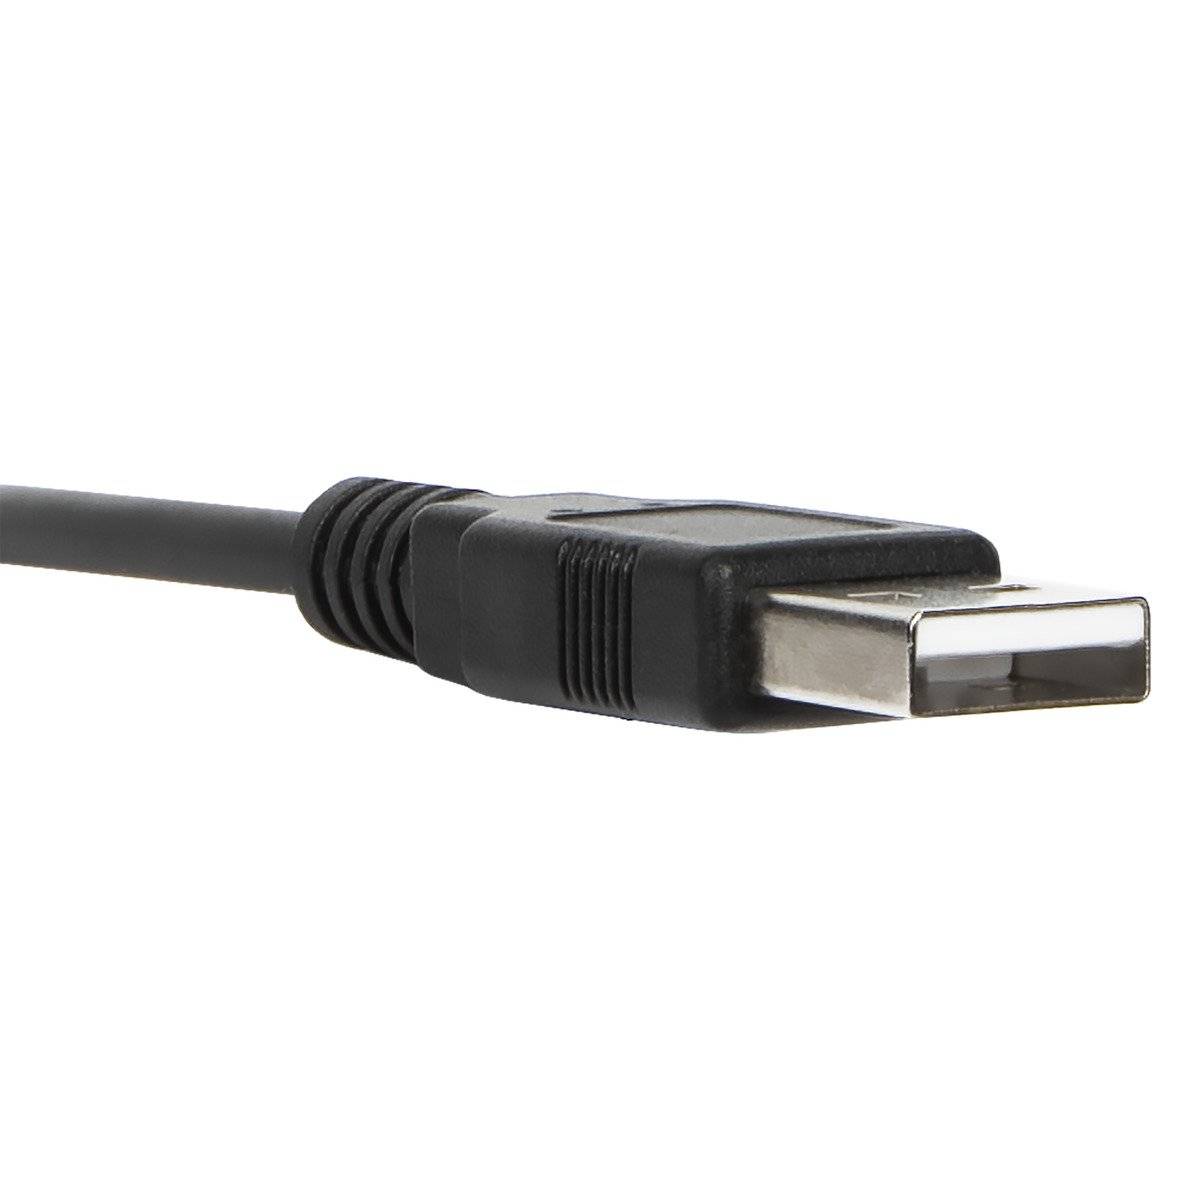 Rca Informatique - image du produit : USB WIRED KBOARD FRENCH LAYOUT FRENCH LAYOUT